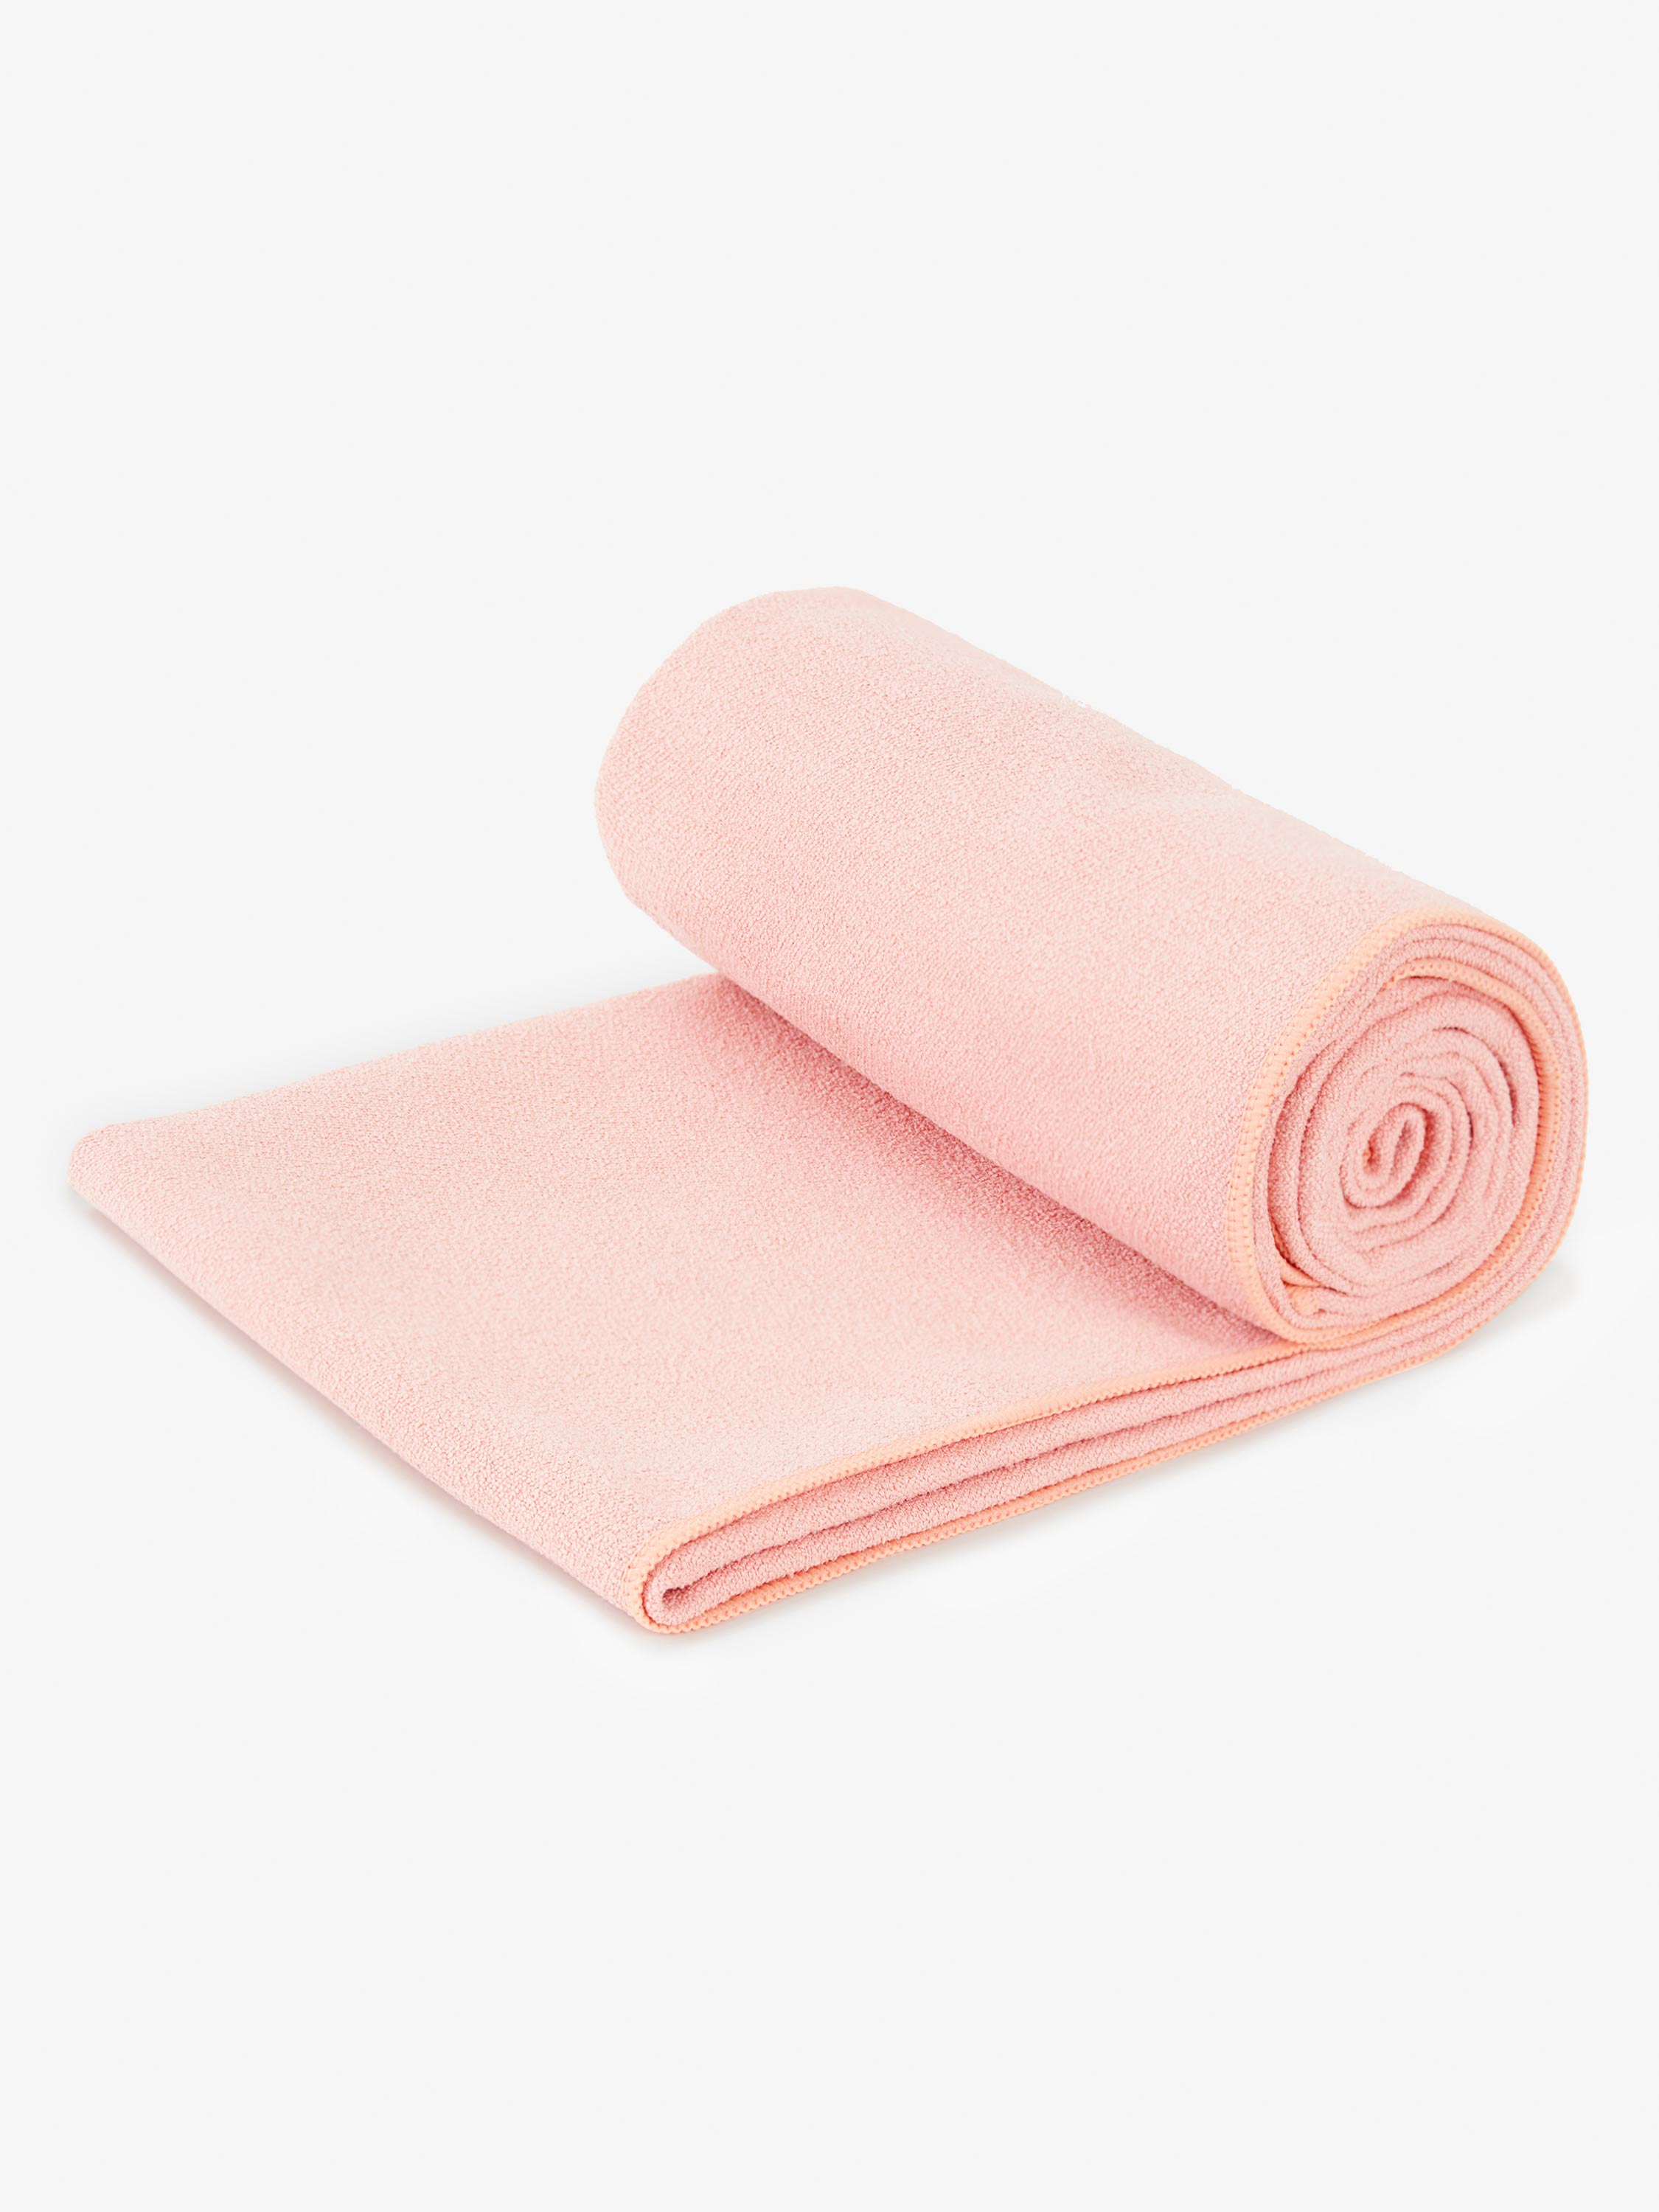 Blush Yoga Mat Towel